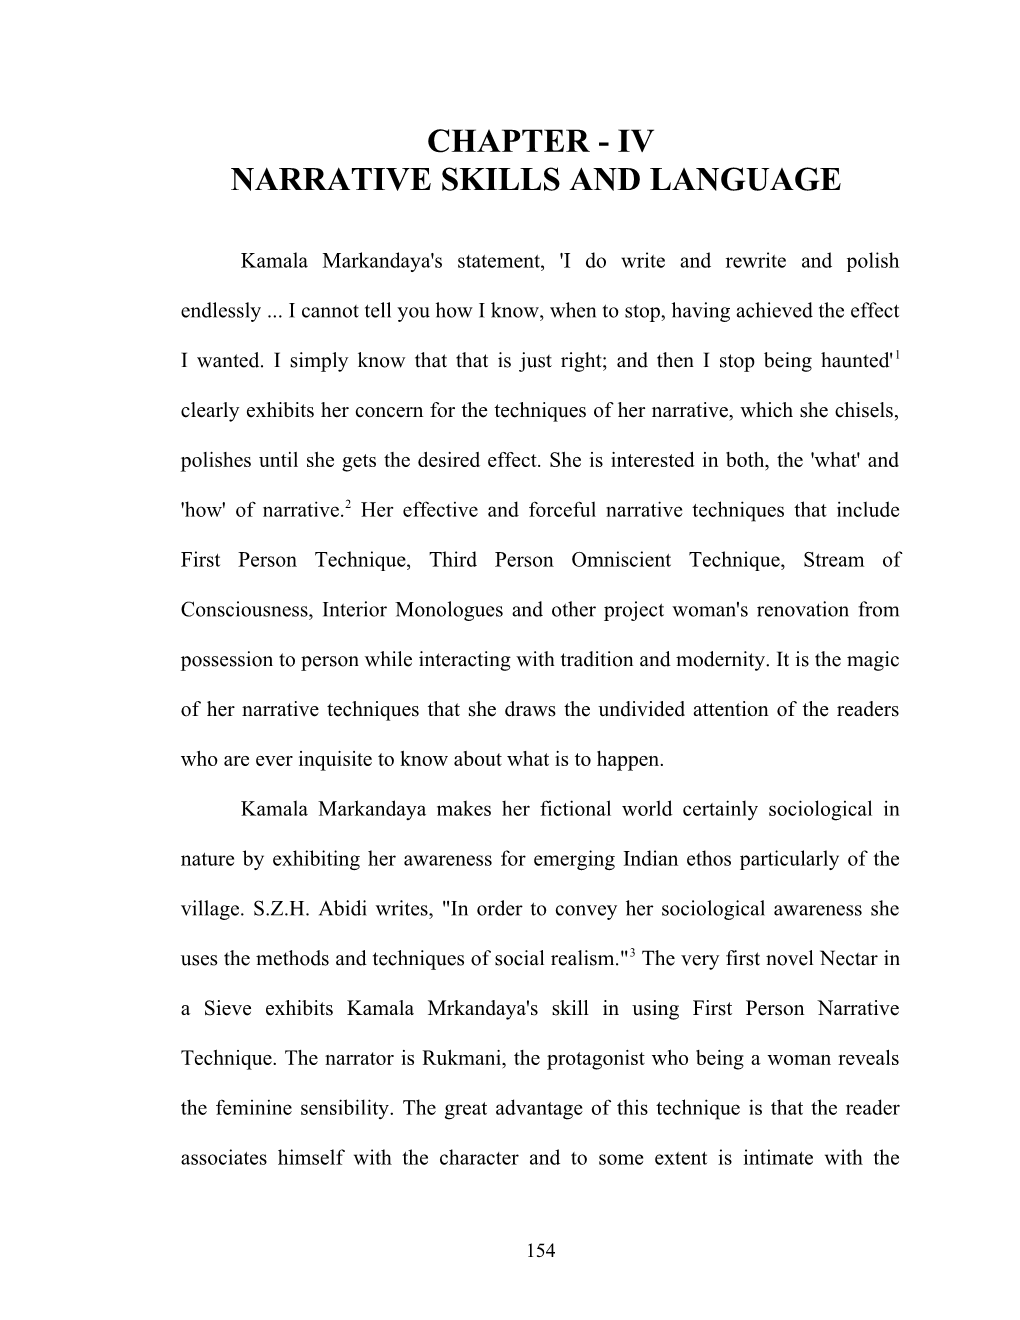 Narrative Skills and Language